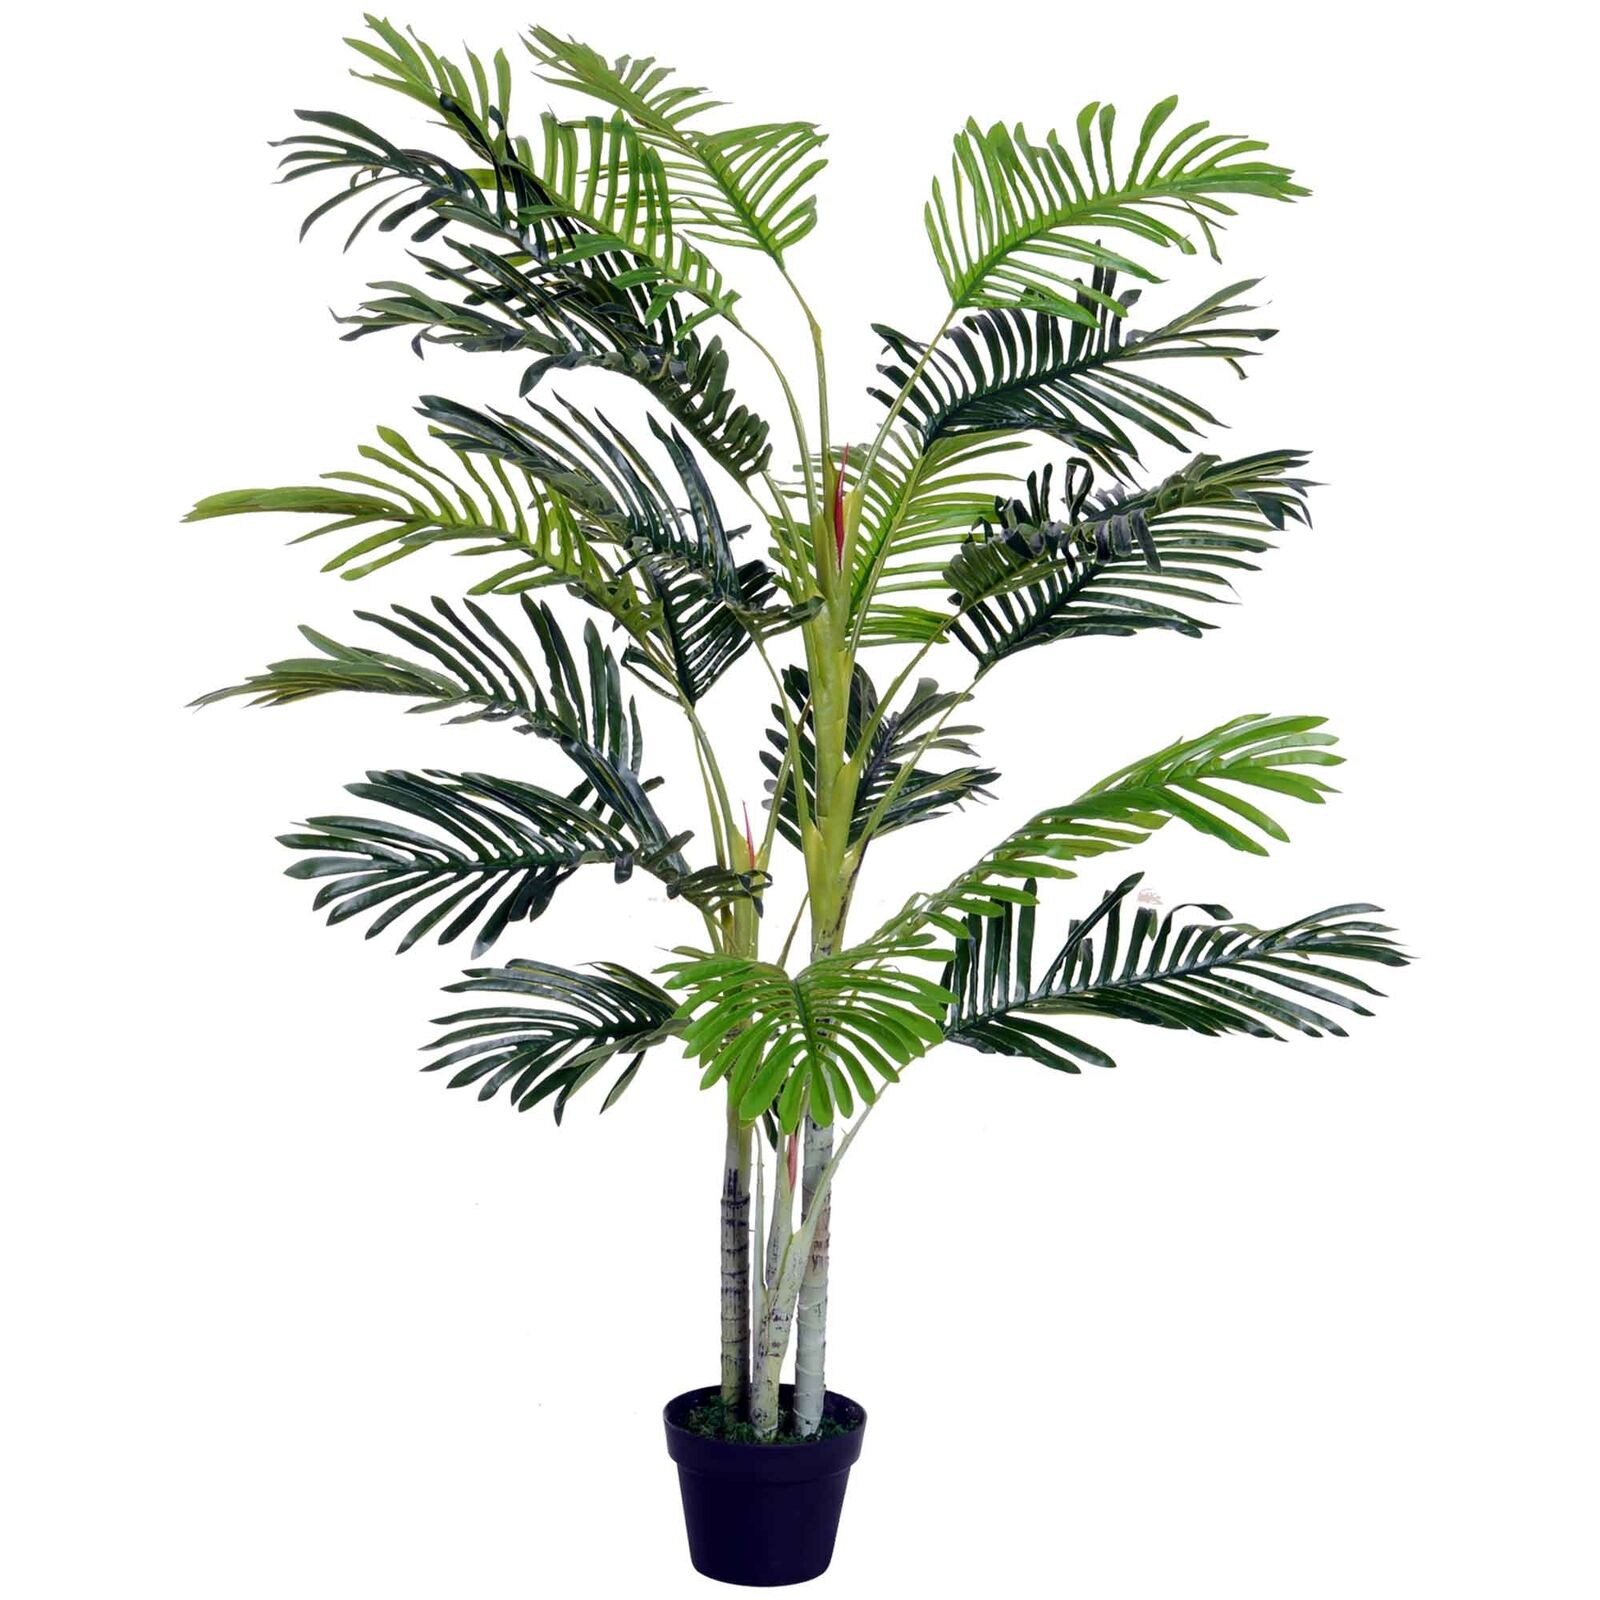 Outsunny Künstliche Palme Groß 150cm Kunstbaum Kunstpflanze 19 Palmenwedel Deko